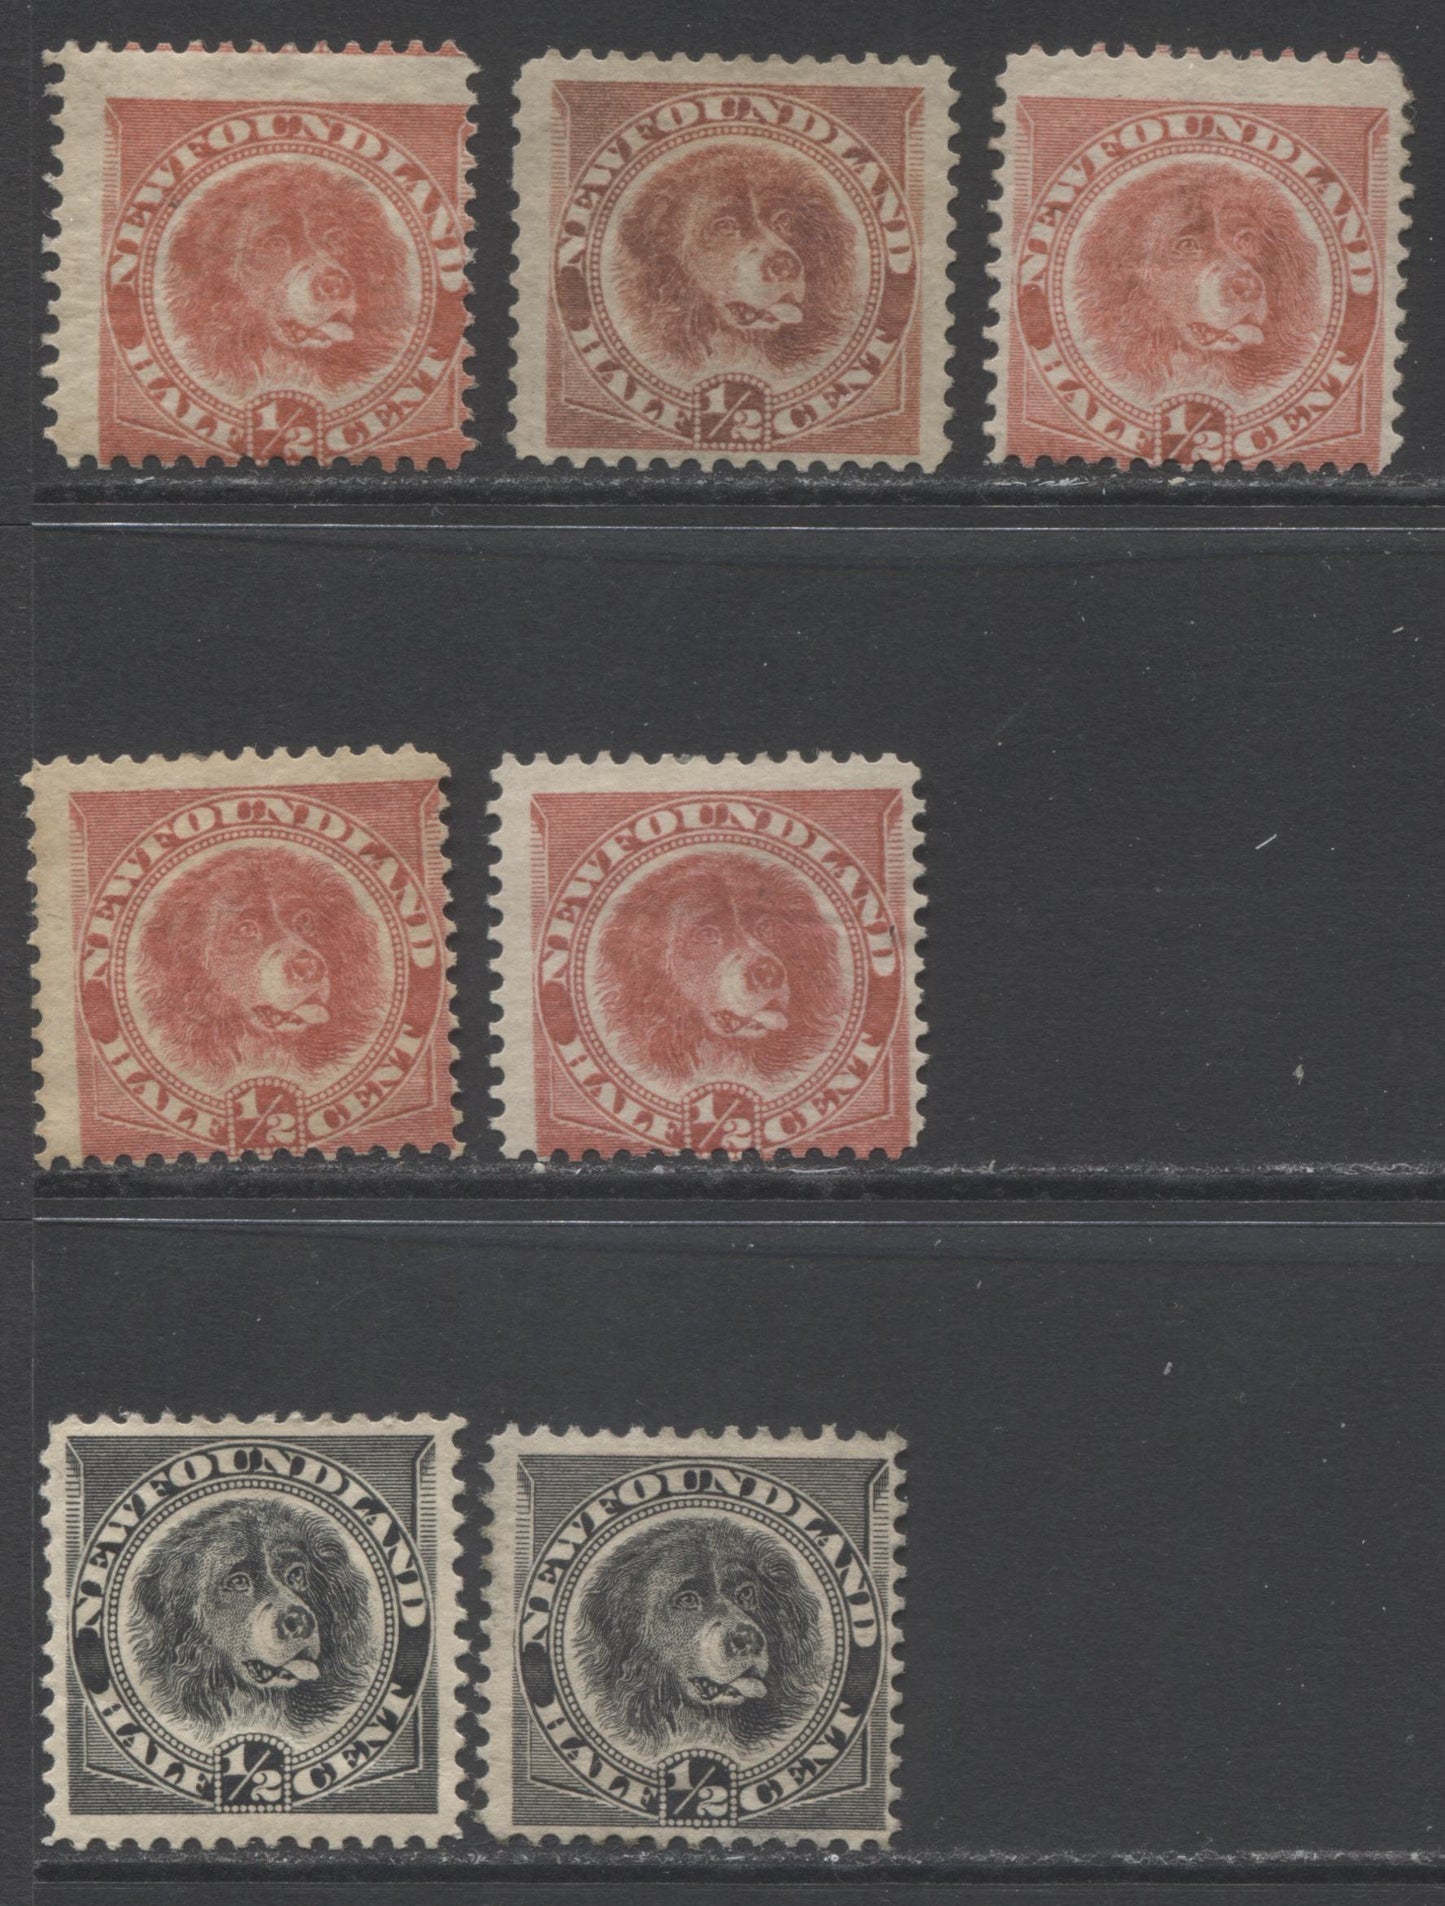 Lot 337 Newfoundland #56, 58 1/2c Rose Red & Black Newfoundland Dog, 1887-1898 Third Cent Issue, 7 Good - Fine Mint  Singles, A Study Lot Of Mint OG Stamps